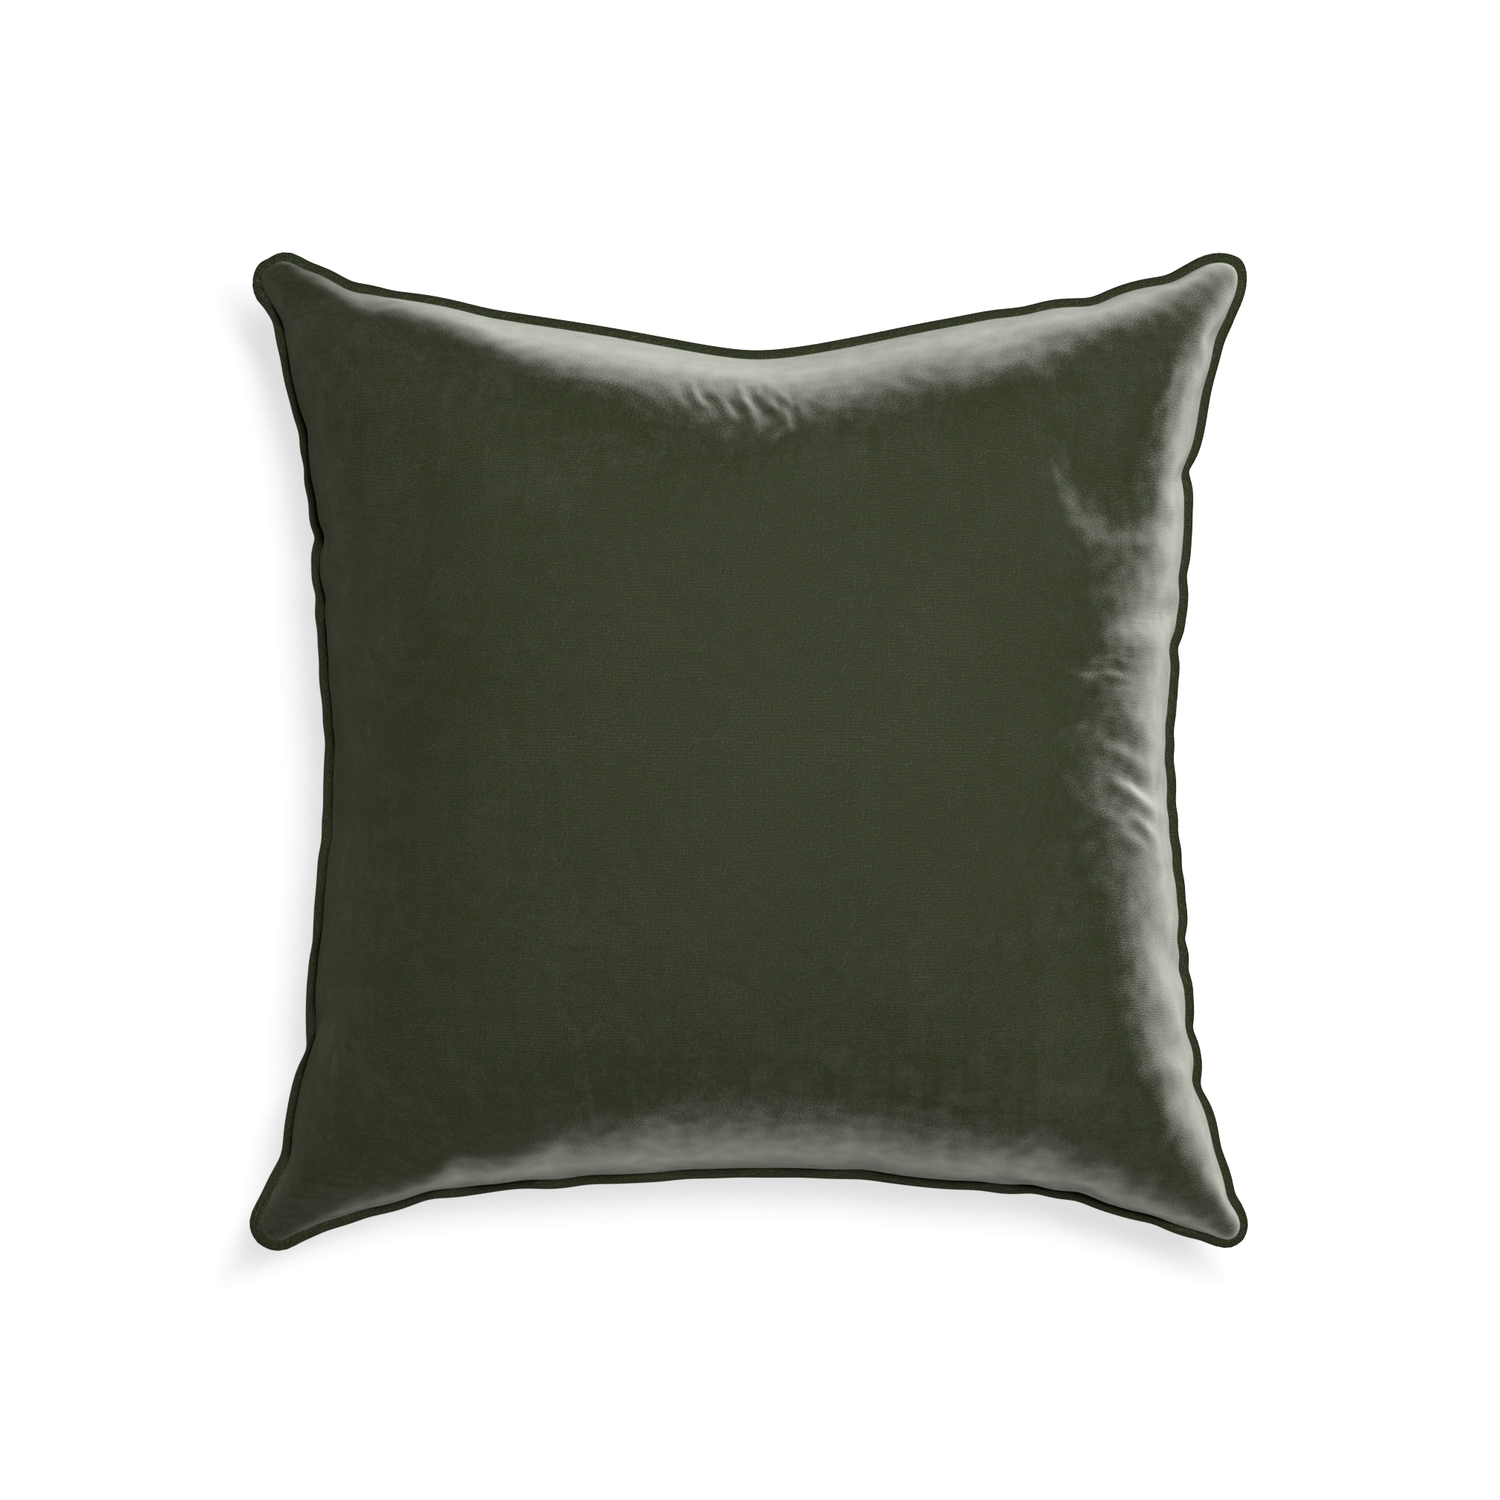 square fern green velvet pillow with fern green piping